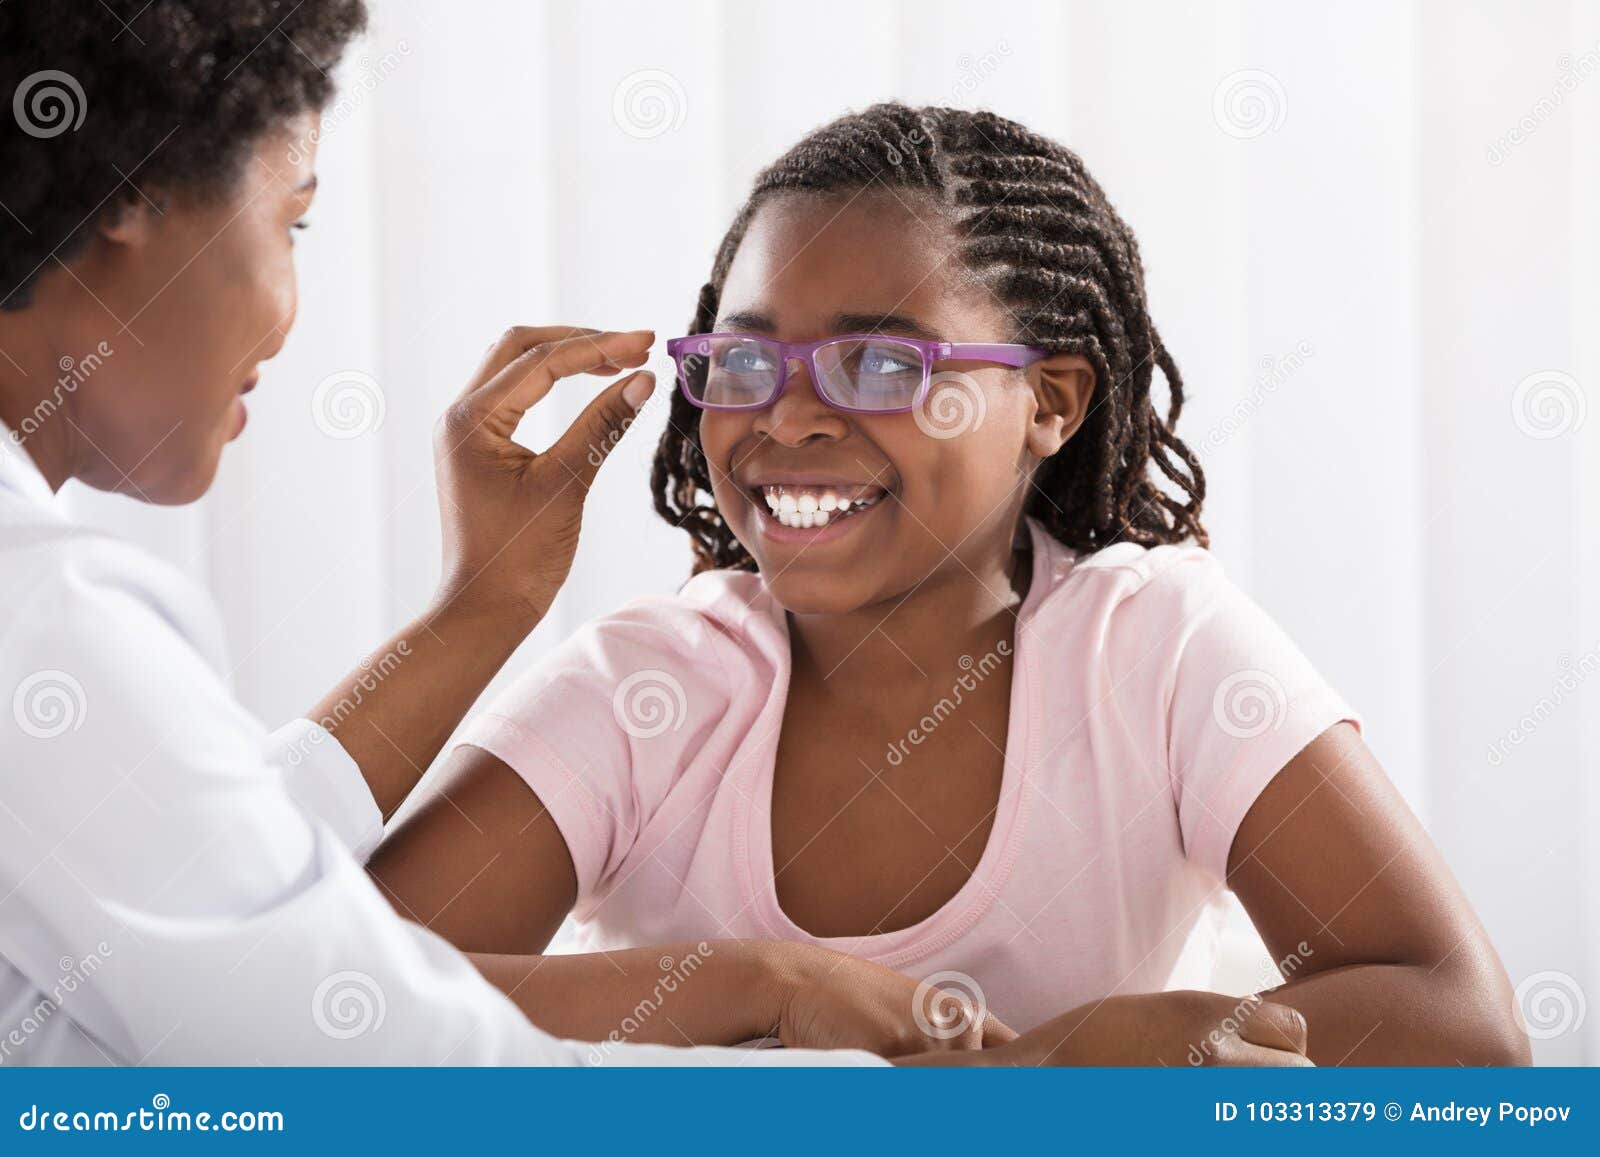 smiling girl wearing eyeglasses in front of optometrist